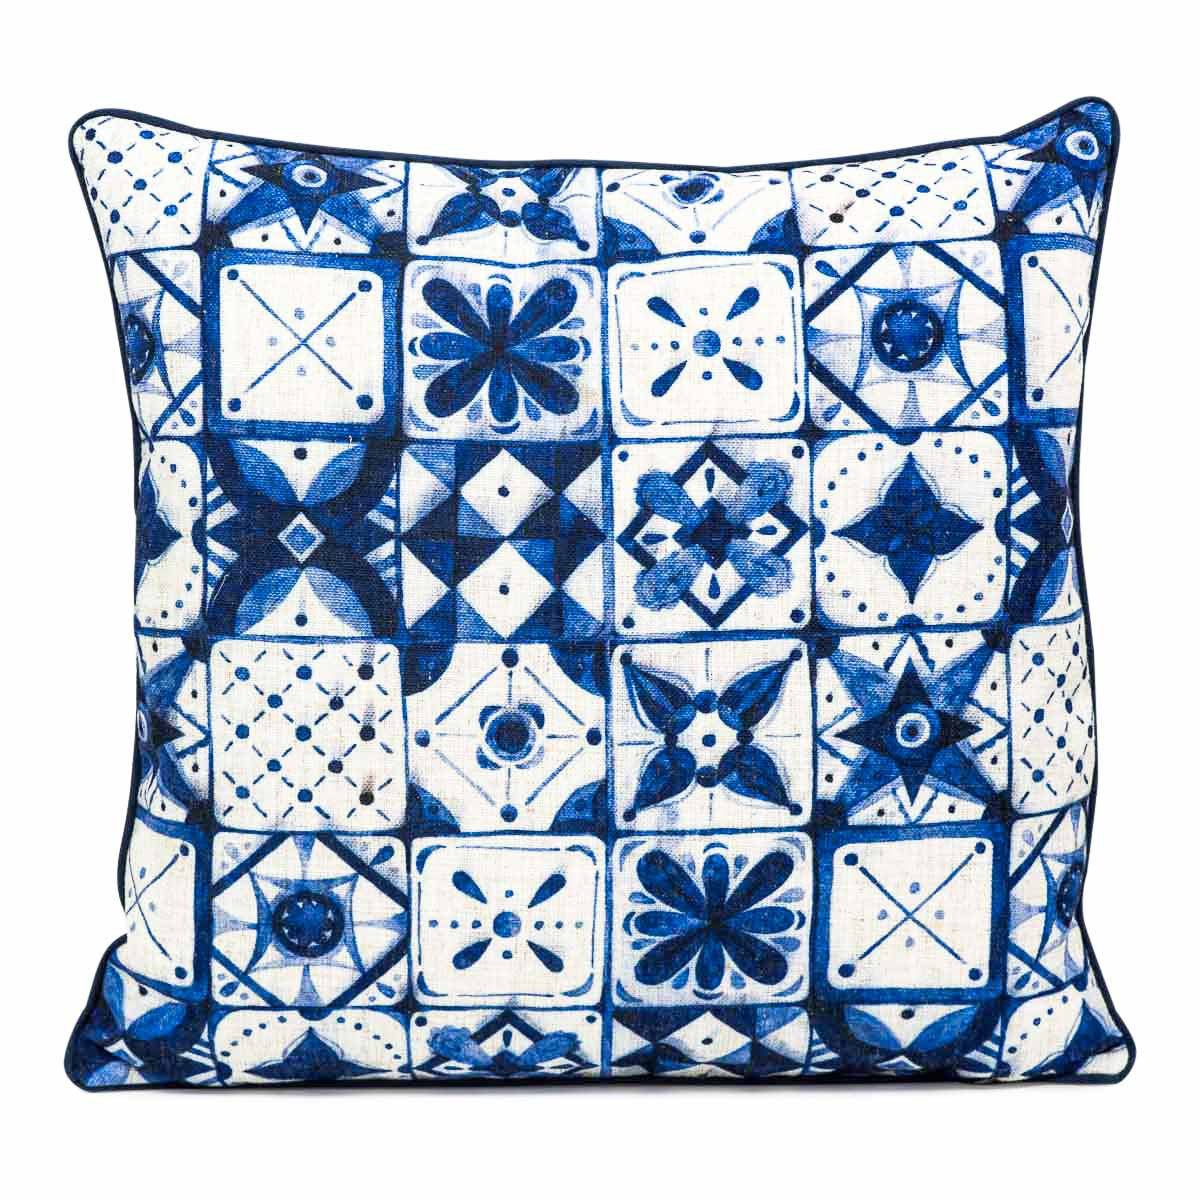 Moroccan Tiles Pattern Pillow - ModShop1.com